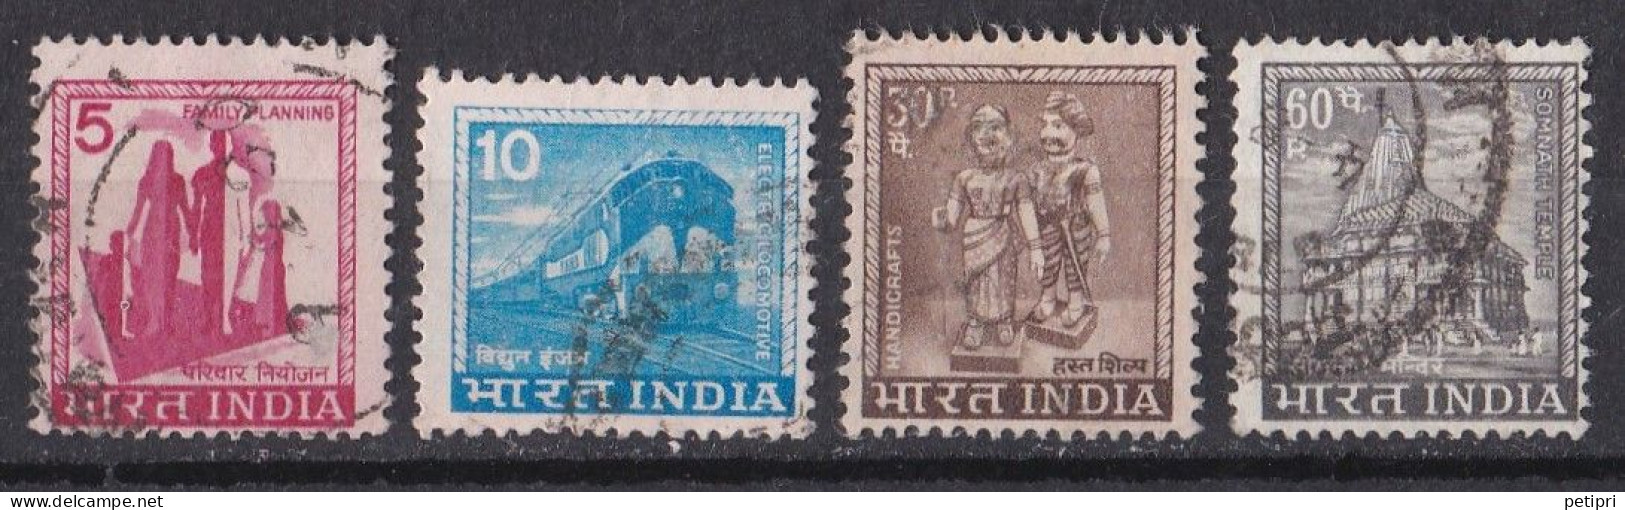 Inde  - 1970  1979 -   Y&T  N °   582   585   586  Et  587   Oblitéré - Gebruikt